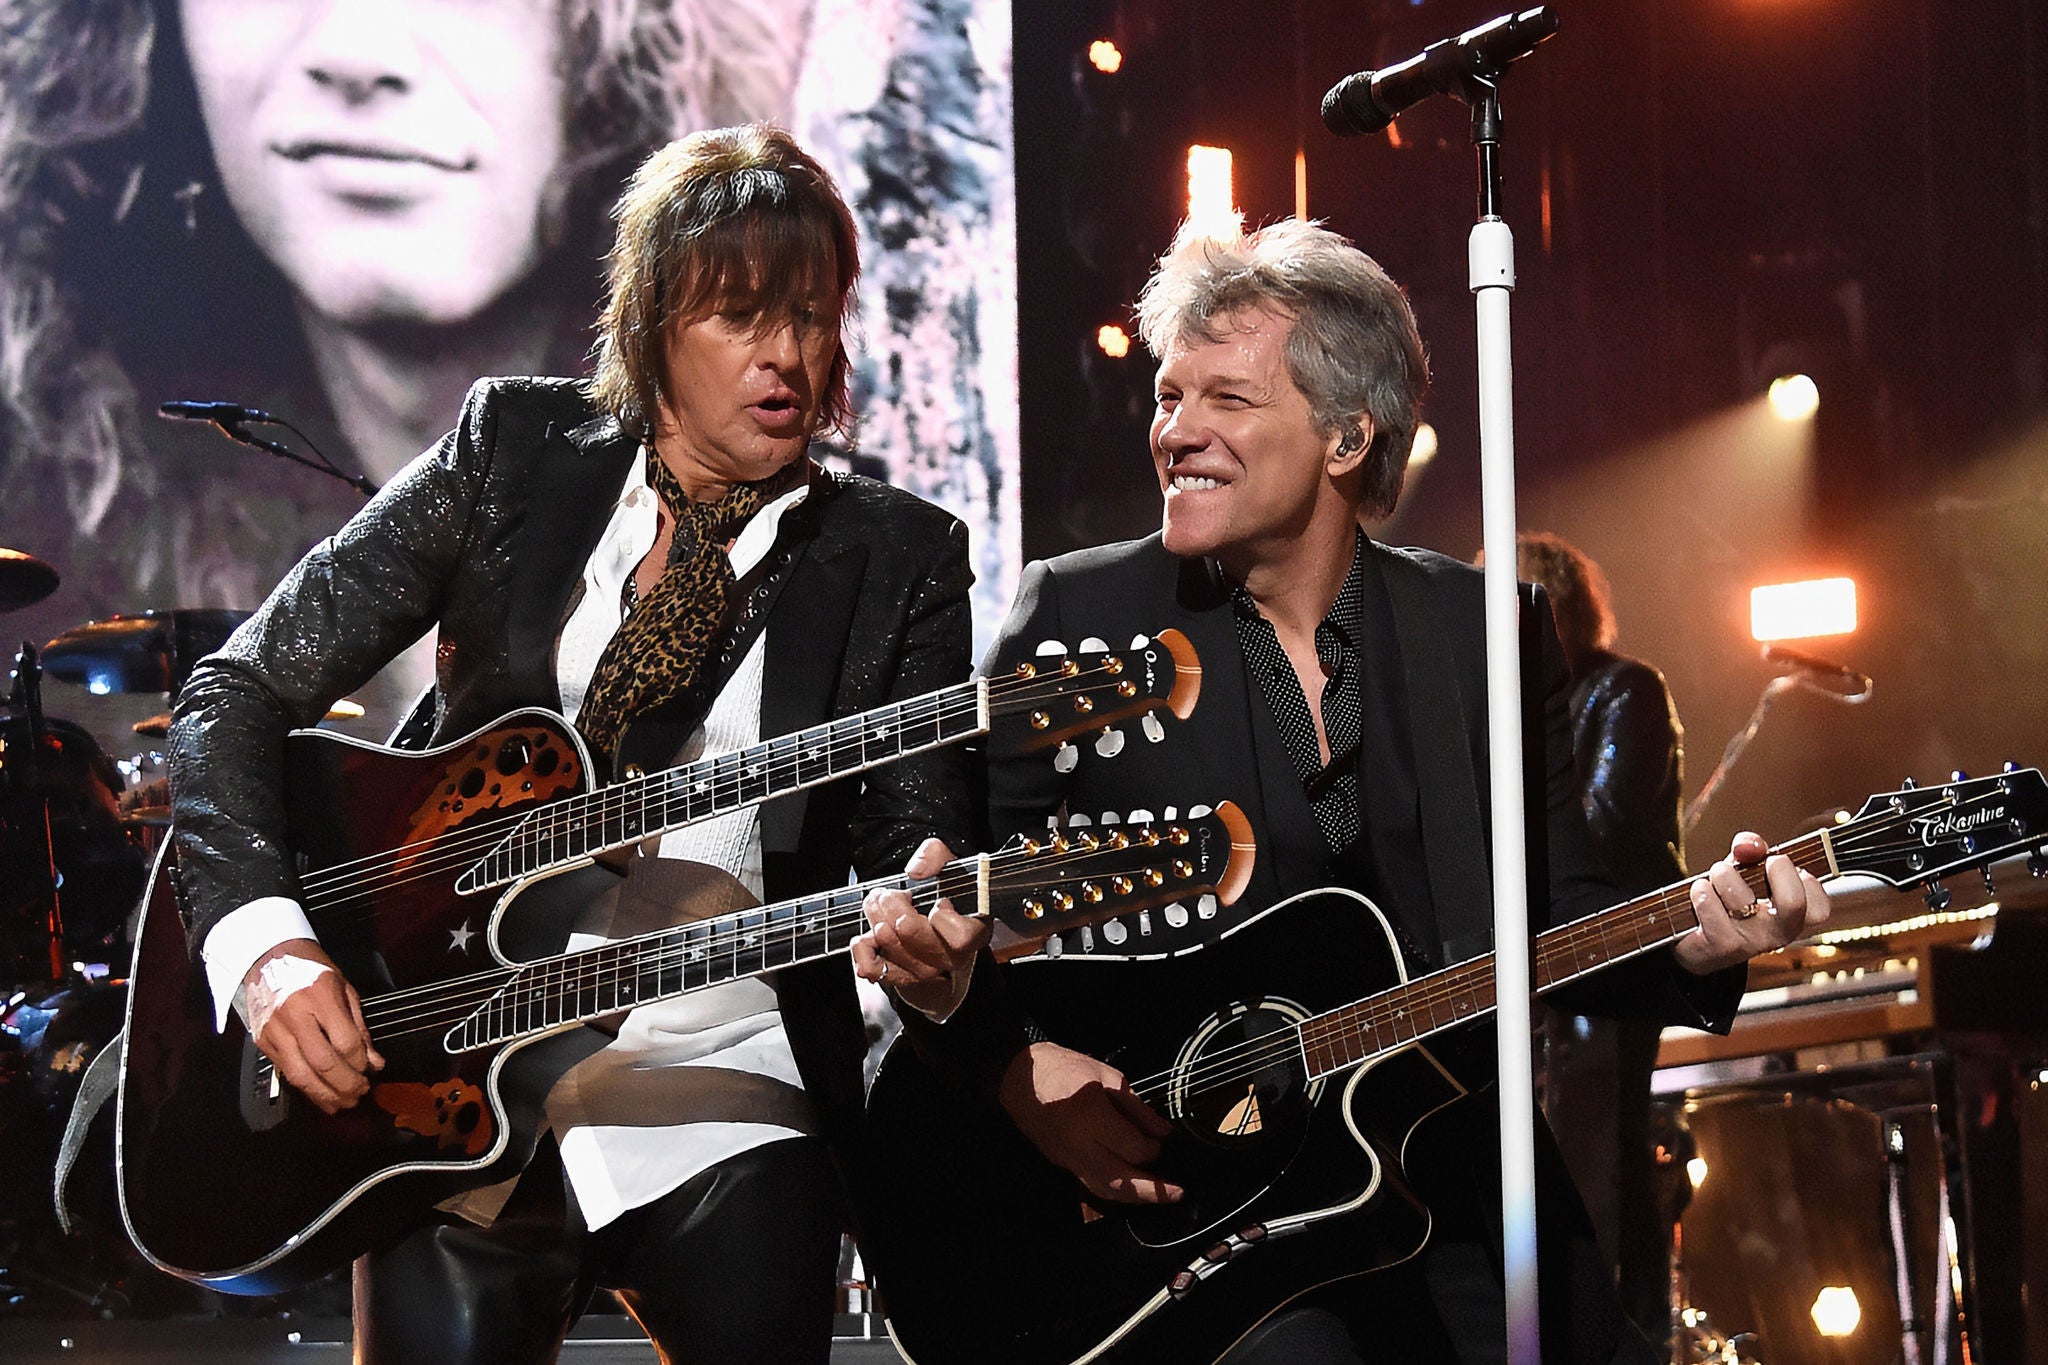 Jon Bon Jovi & Richie Sambora perform at the 2018 Rock & Roll Hall of Fame Inductee ceremony